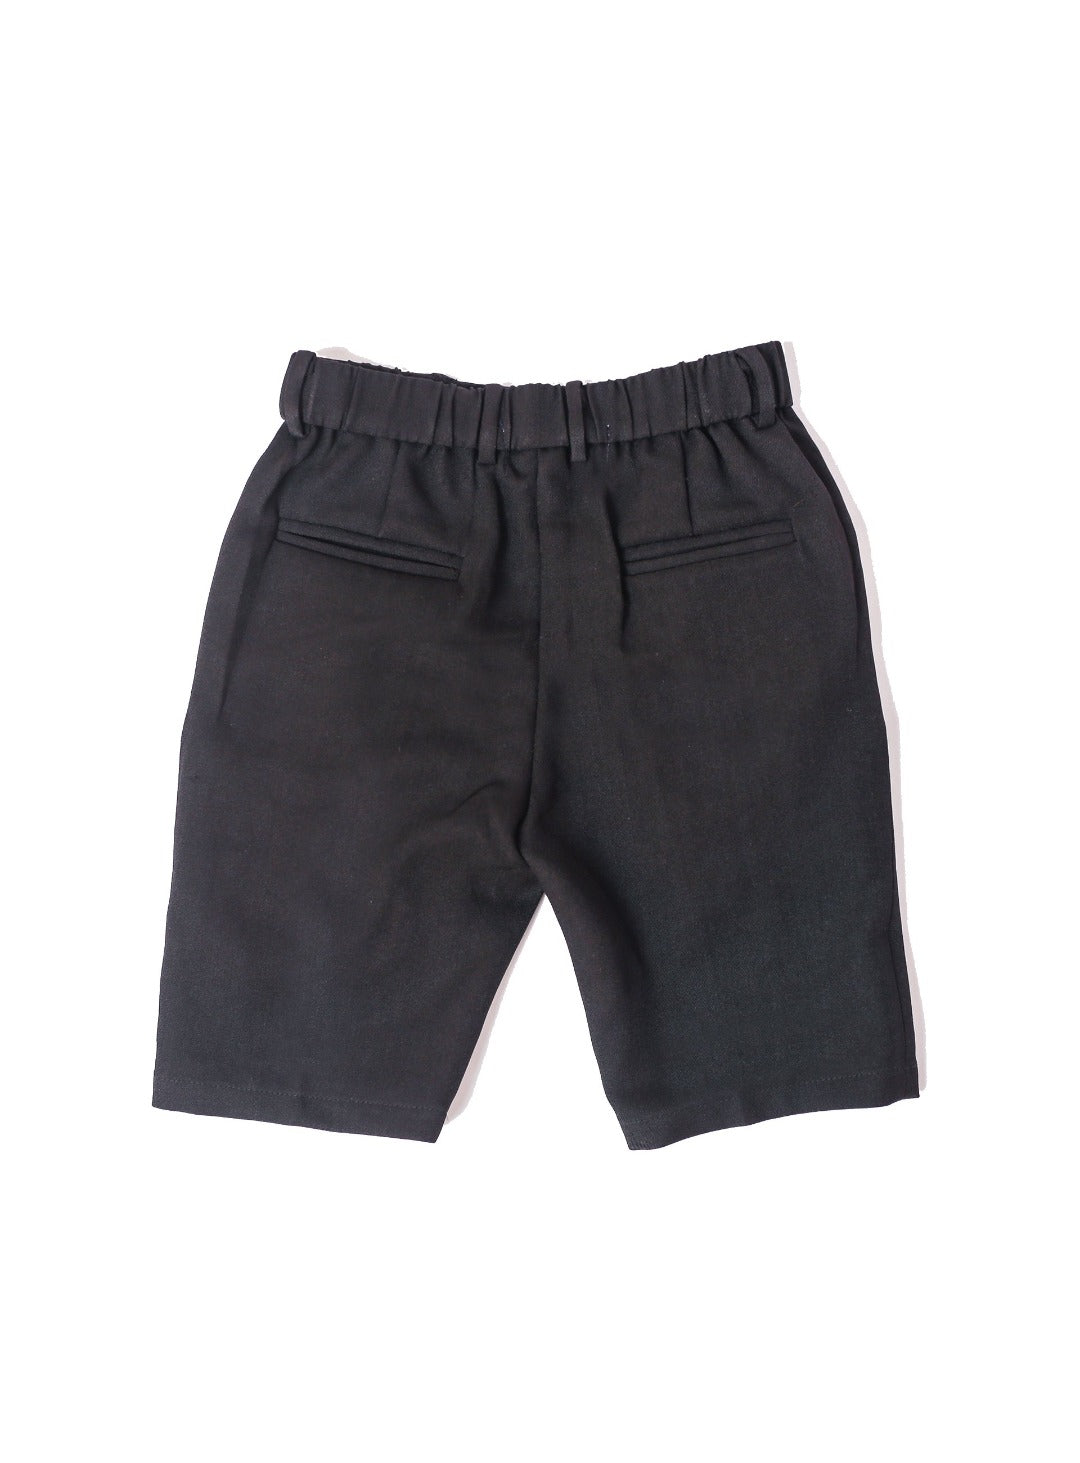 midnight black midi length shorts